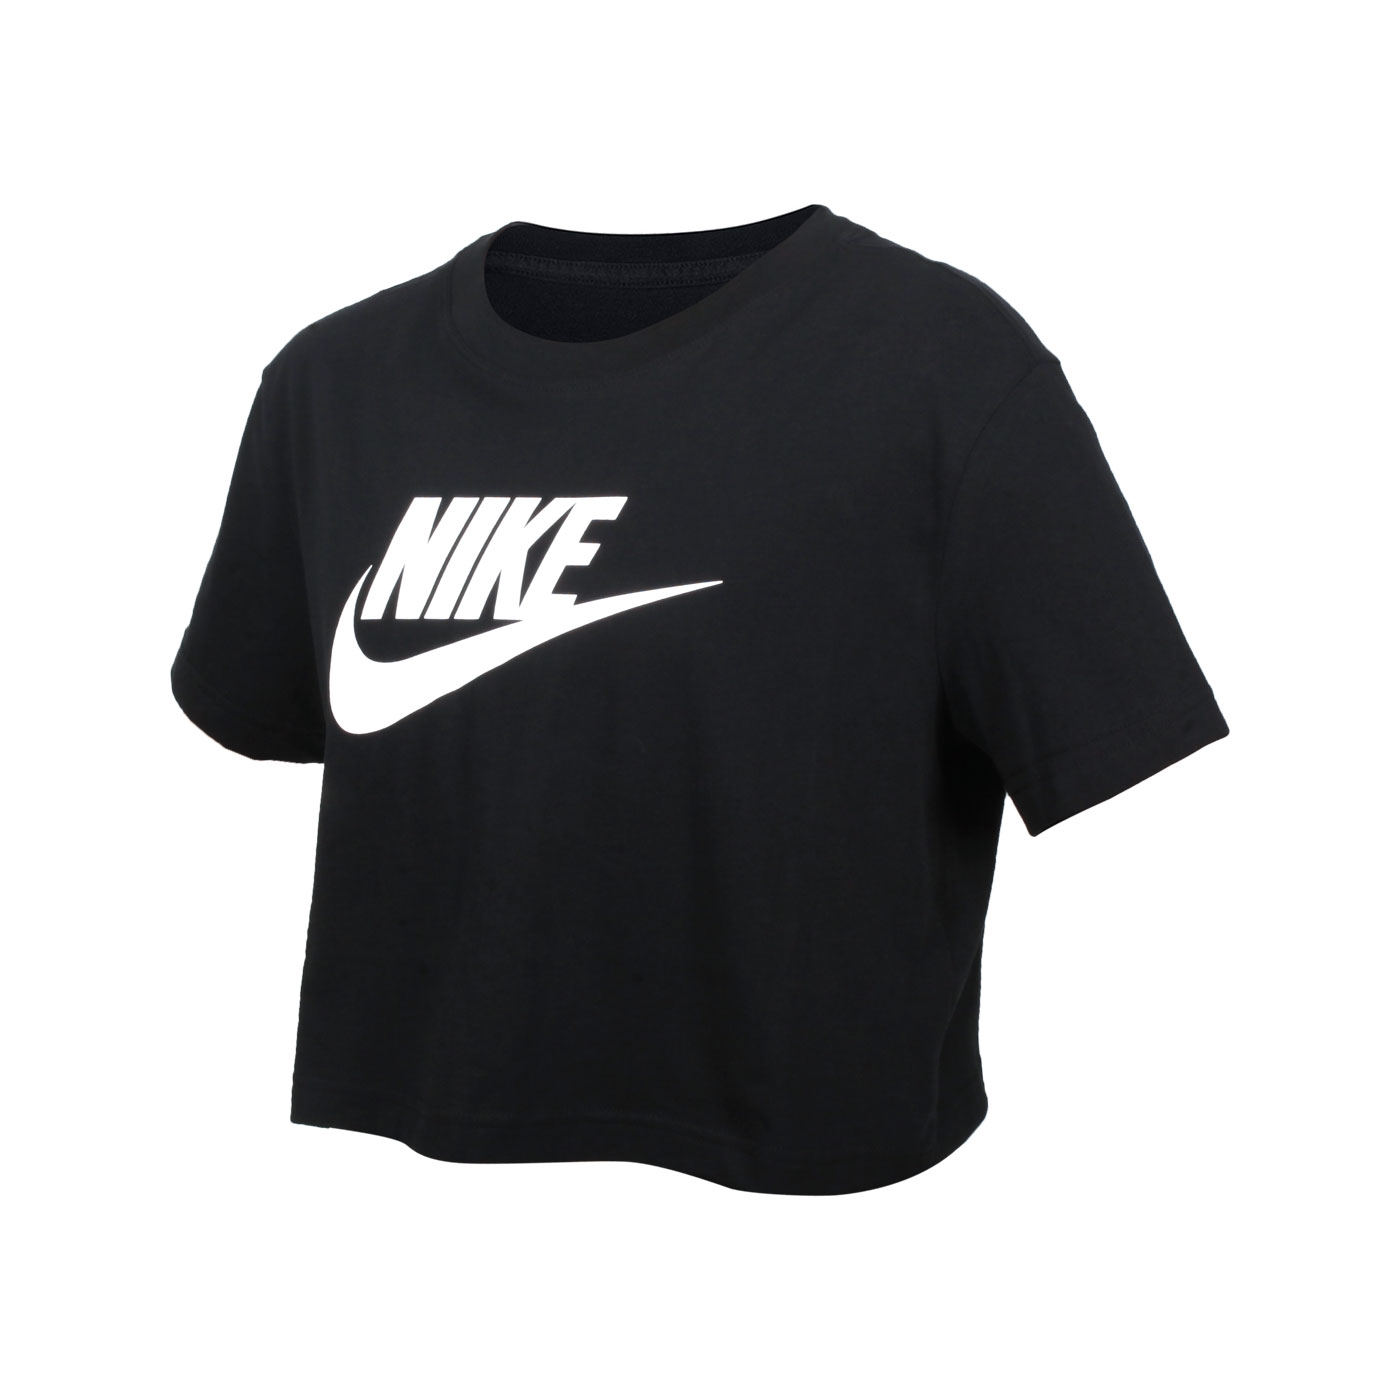 NIKE 女款短版短袖T恤 BV6176-010 - 黑白